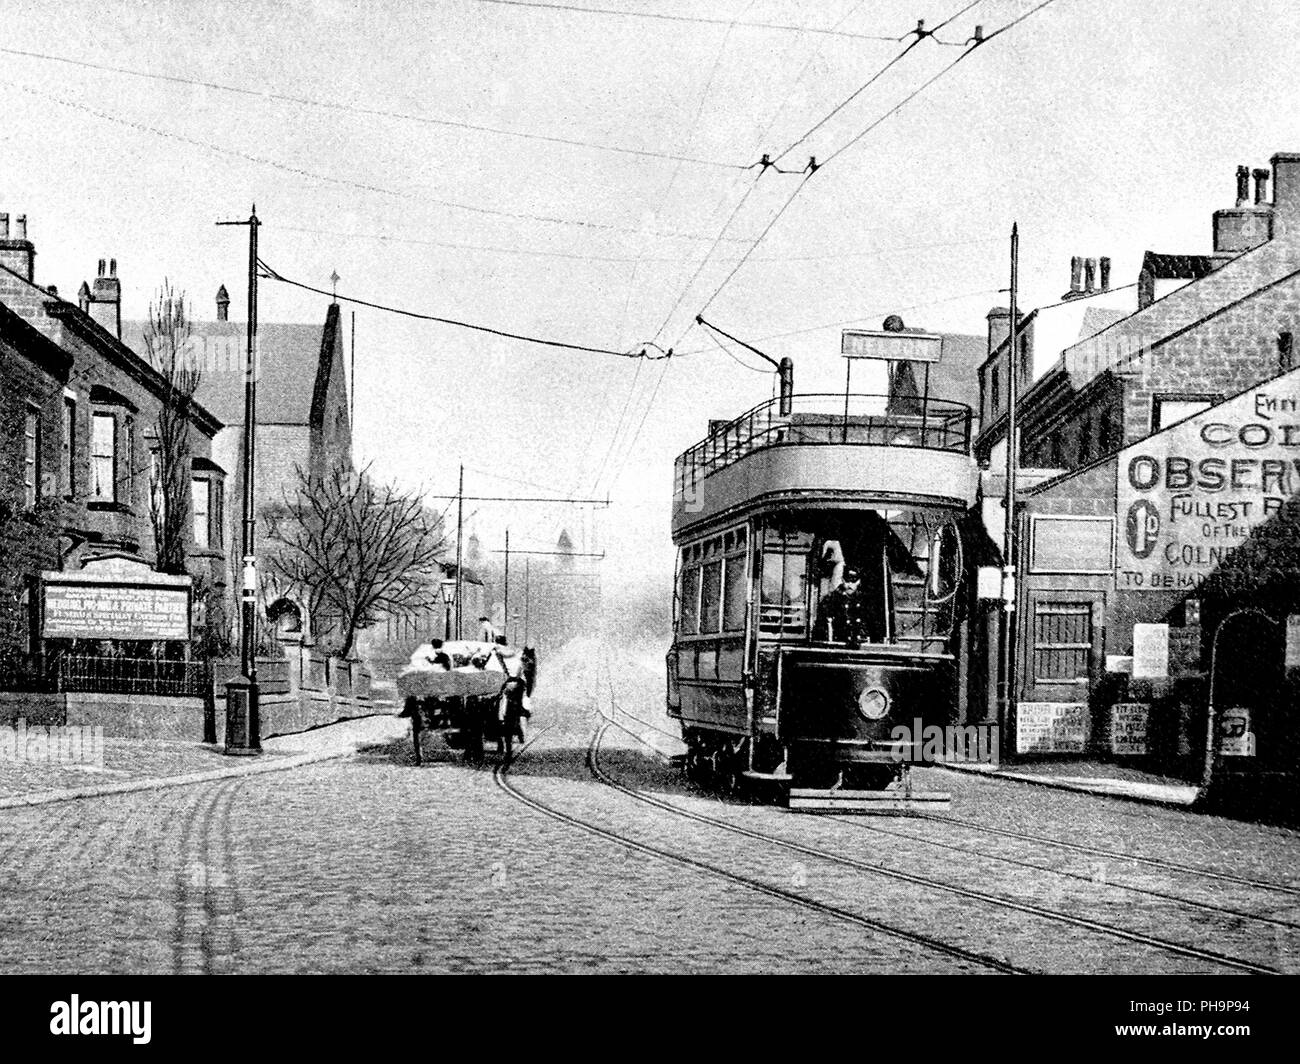 Tram in Albert Road, Colne, early 1900s Stock Photo